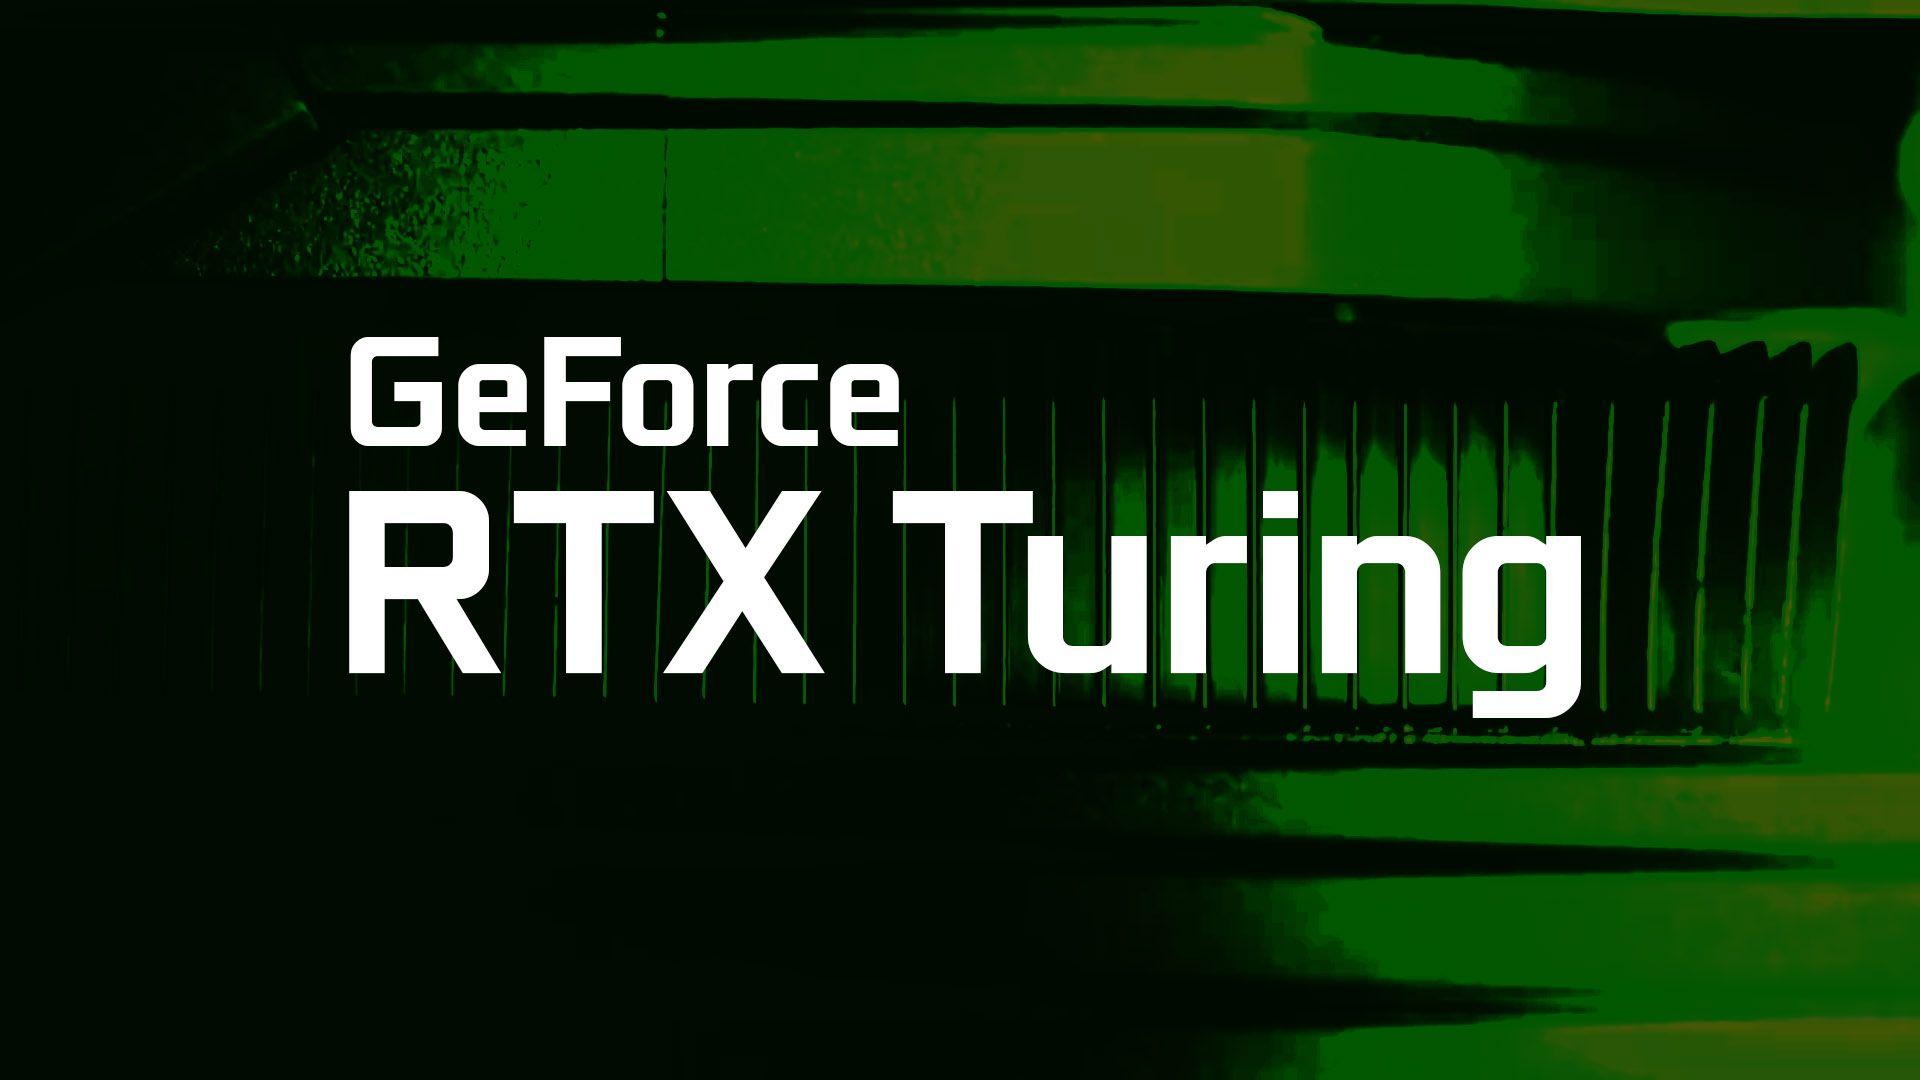 NVIDIA GeForce RTX 2080 Ti 11GB and RTX 2080 8GB Graphics Card